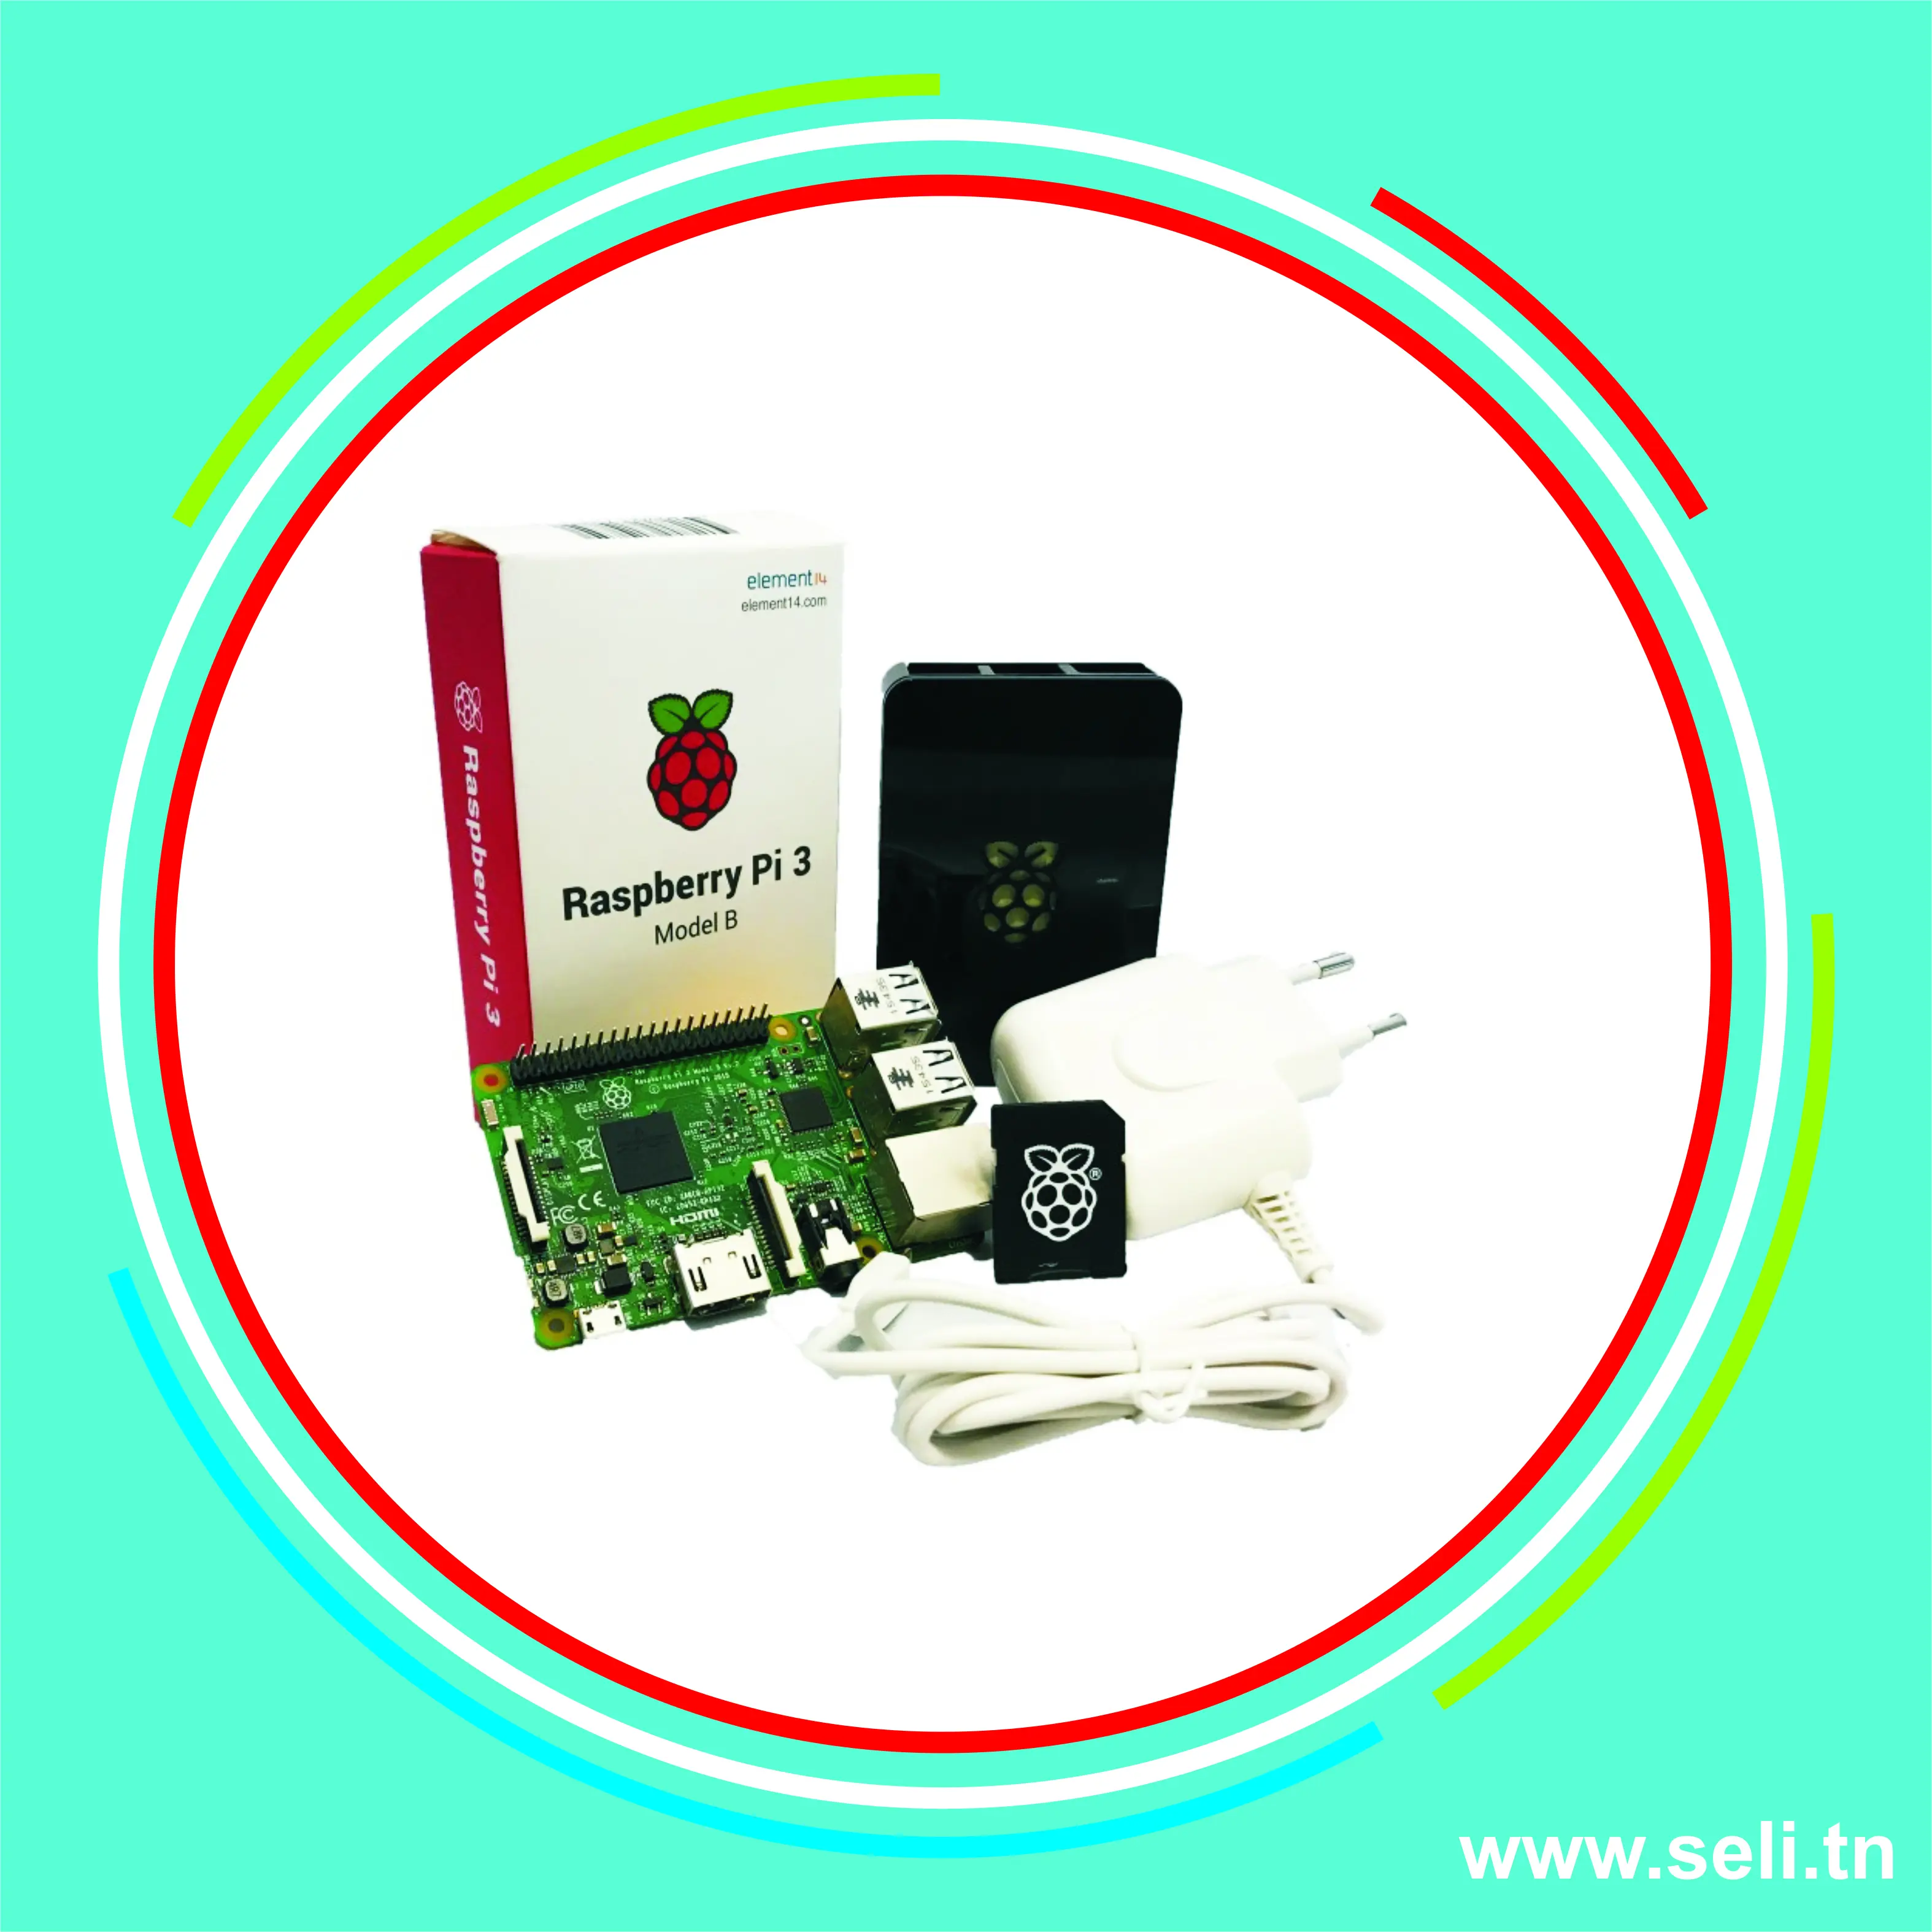 KIT RASPBERRY PI3 - 1G MODEL B AVEC BOITIER OFFICIEL+SD 16GB NOOBS+ALIMENTATION.Arduino tunisie